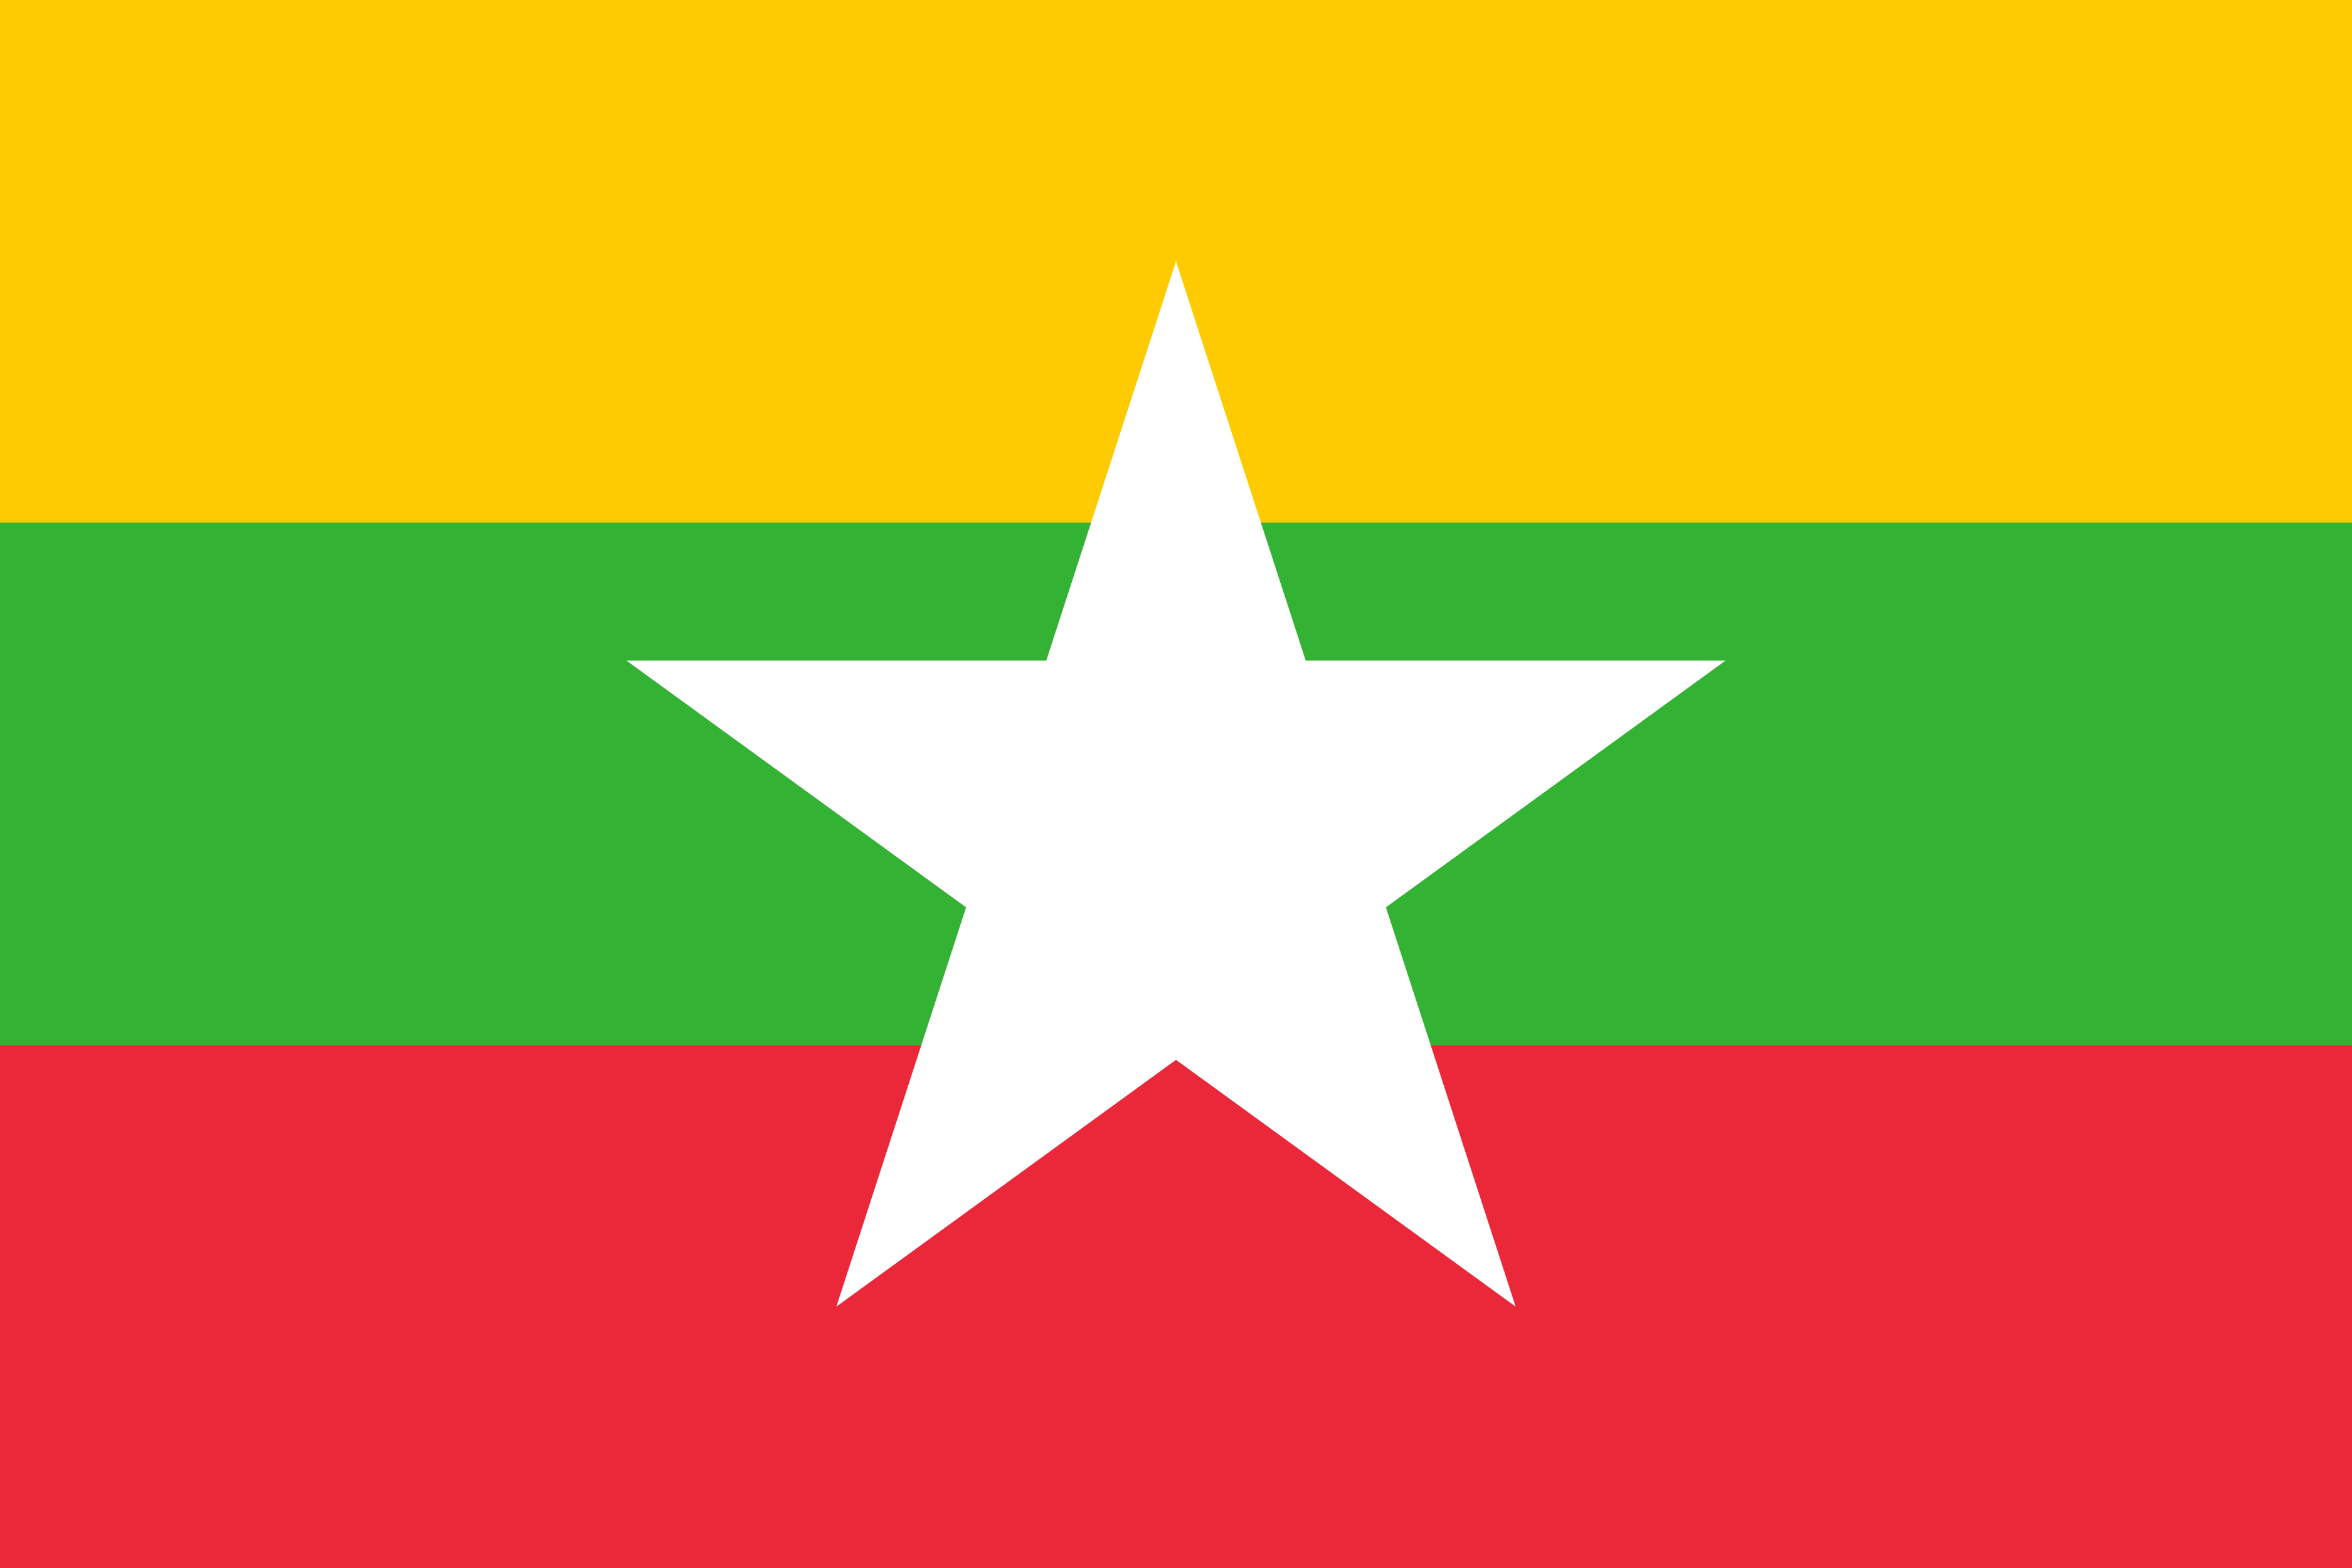 Free Myanmar Flag Documents: PDF, DOC, DOCX, HTML & More!